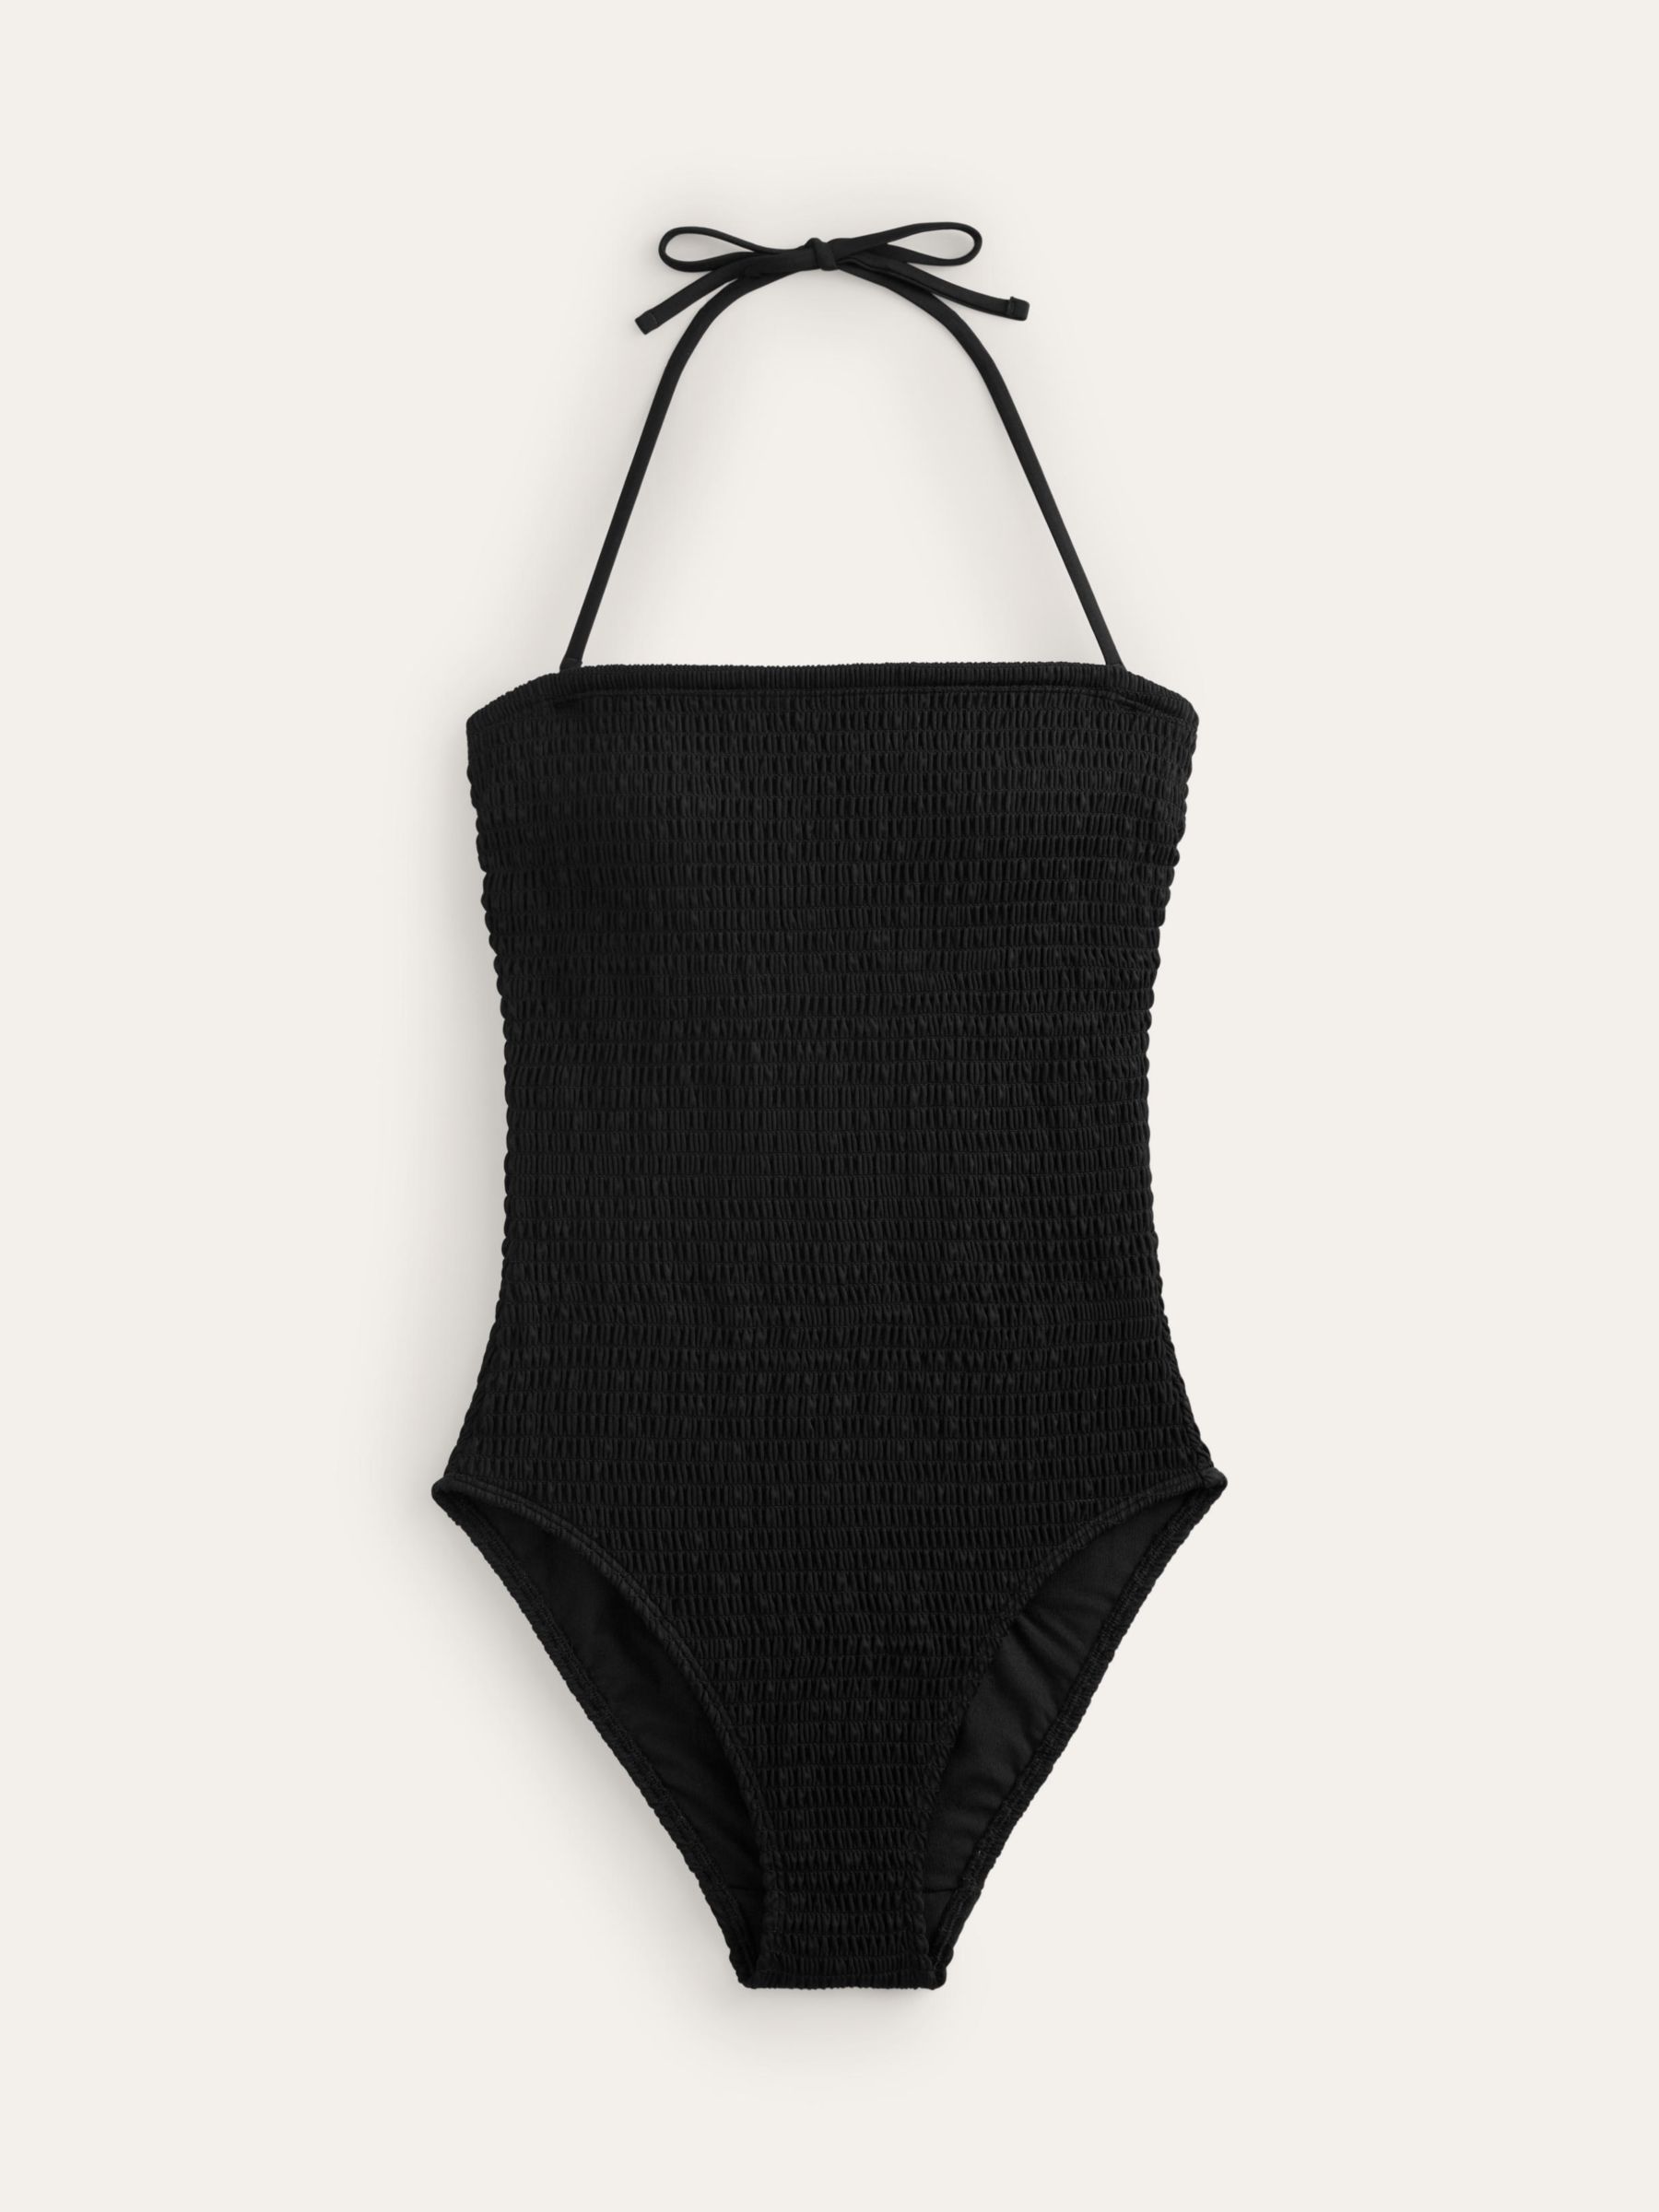 Boden Milos Smock Textured Bandeau Swimsuit, Black, 16